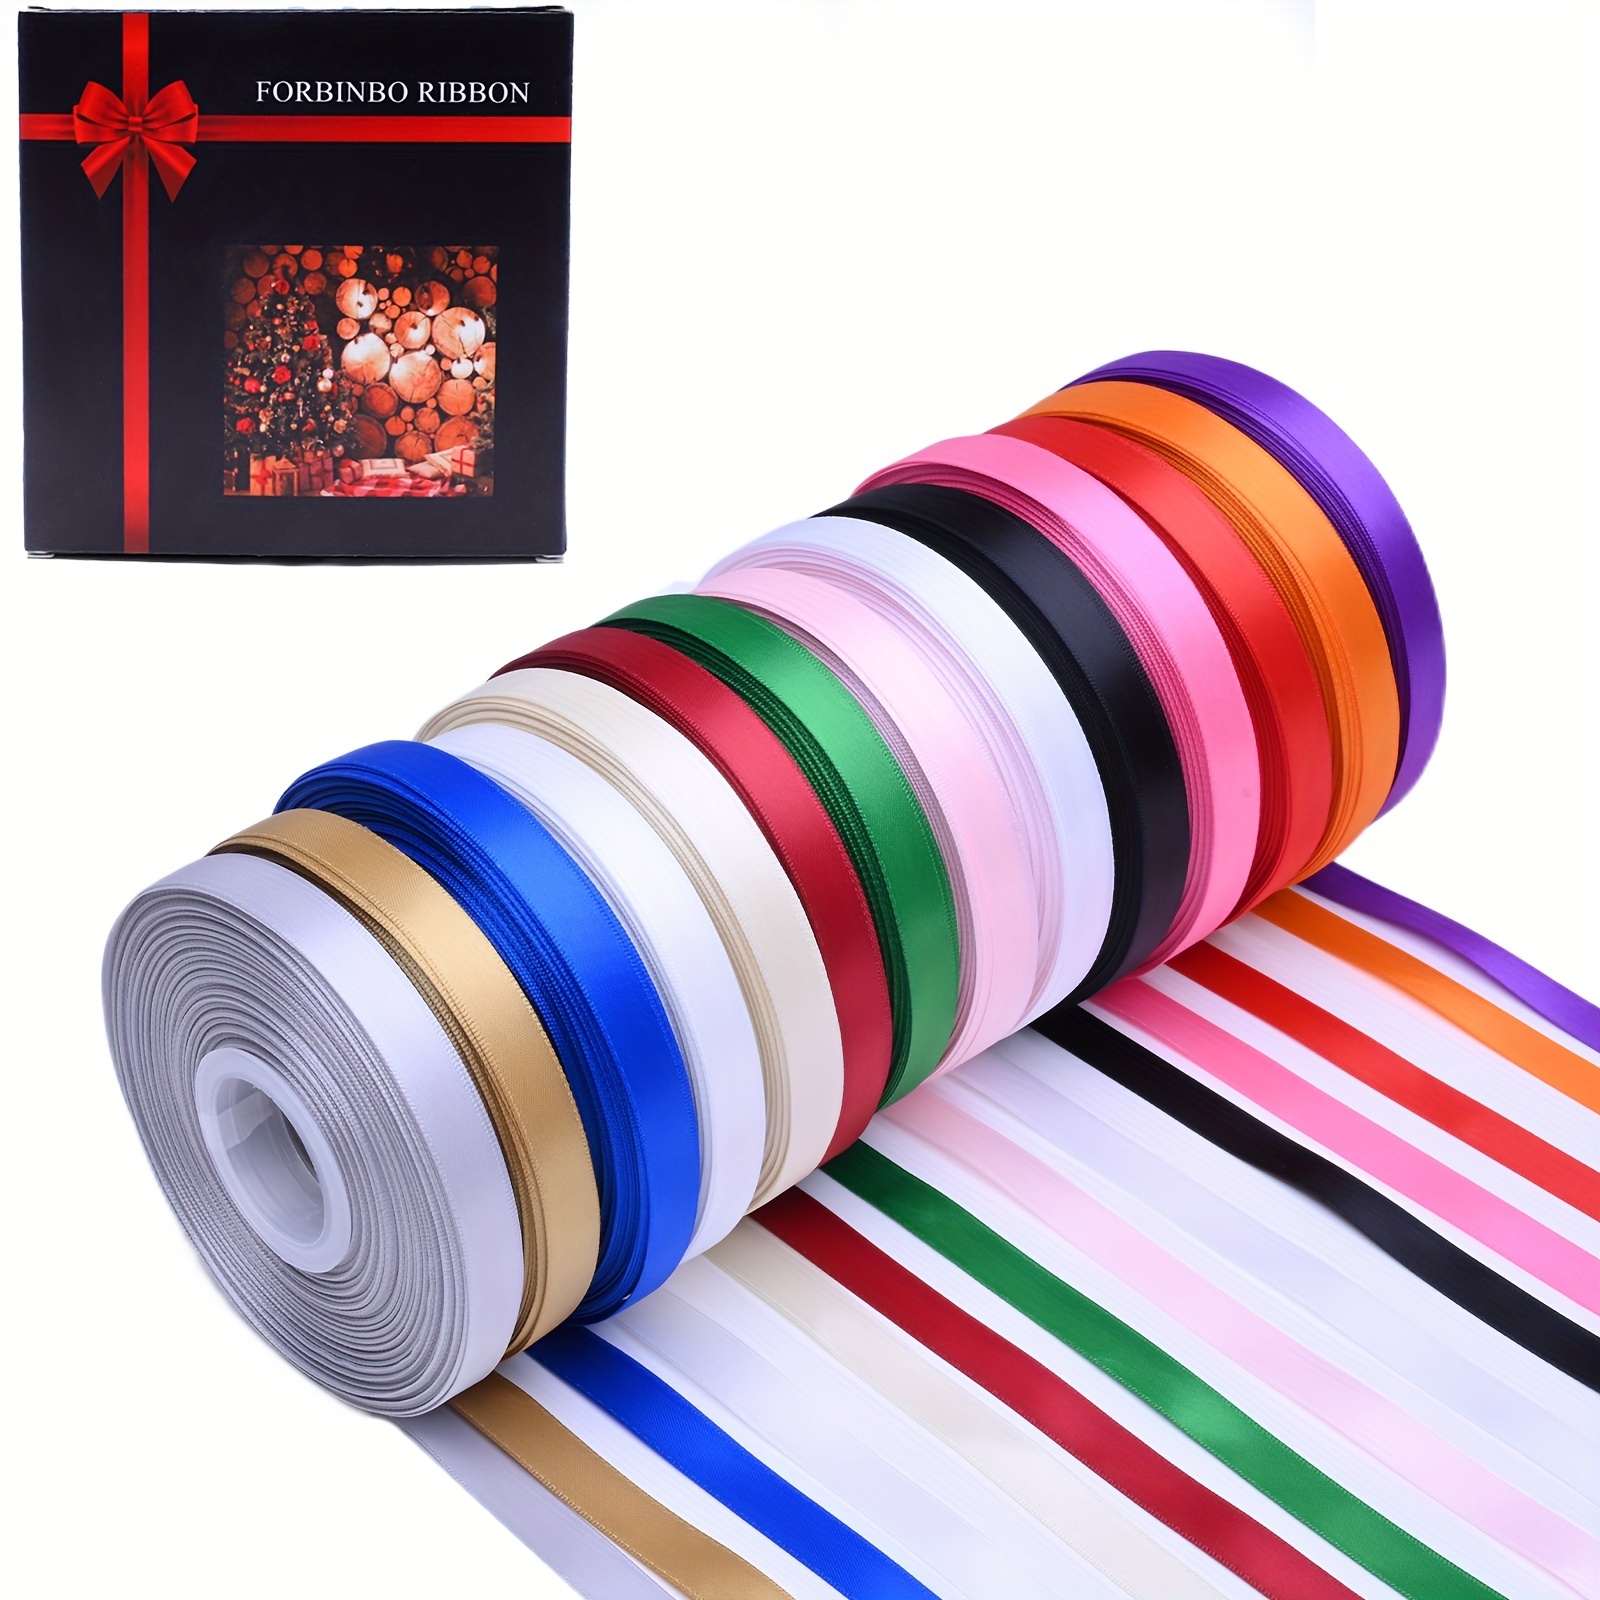 Cinta de raso de color, cinta de tela satinada de doble cara DIY para  manualidades, envoltura de regalos, decoración para fiesta de boda,  amaranto